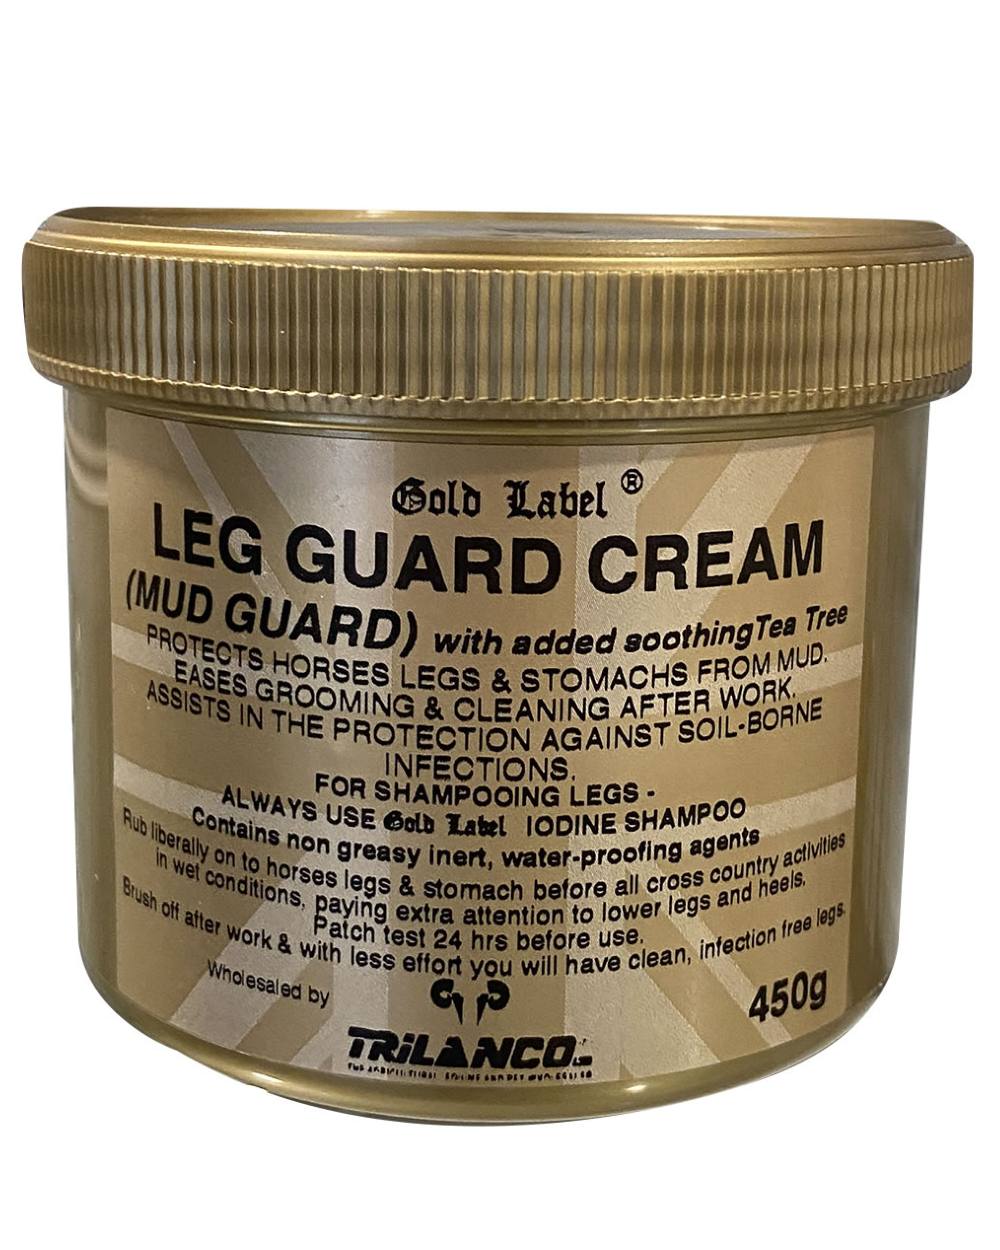 Gold Label Leg Guard Cream On A White Background